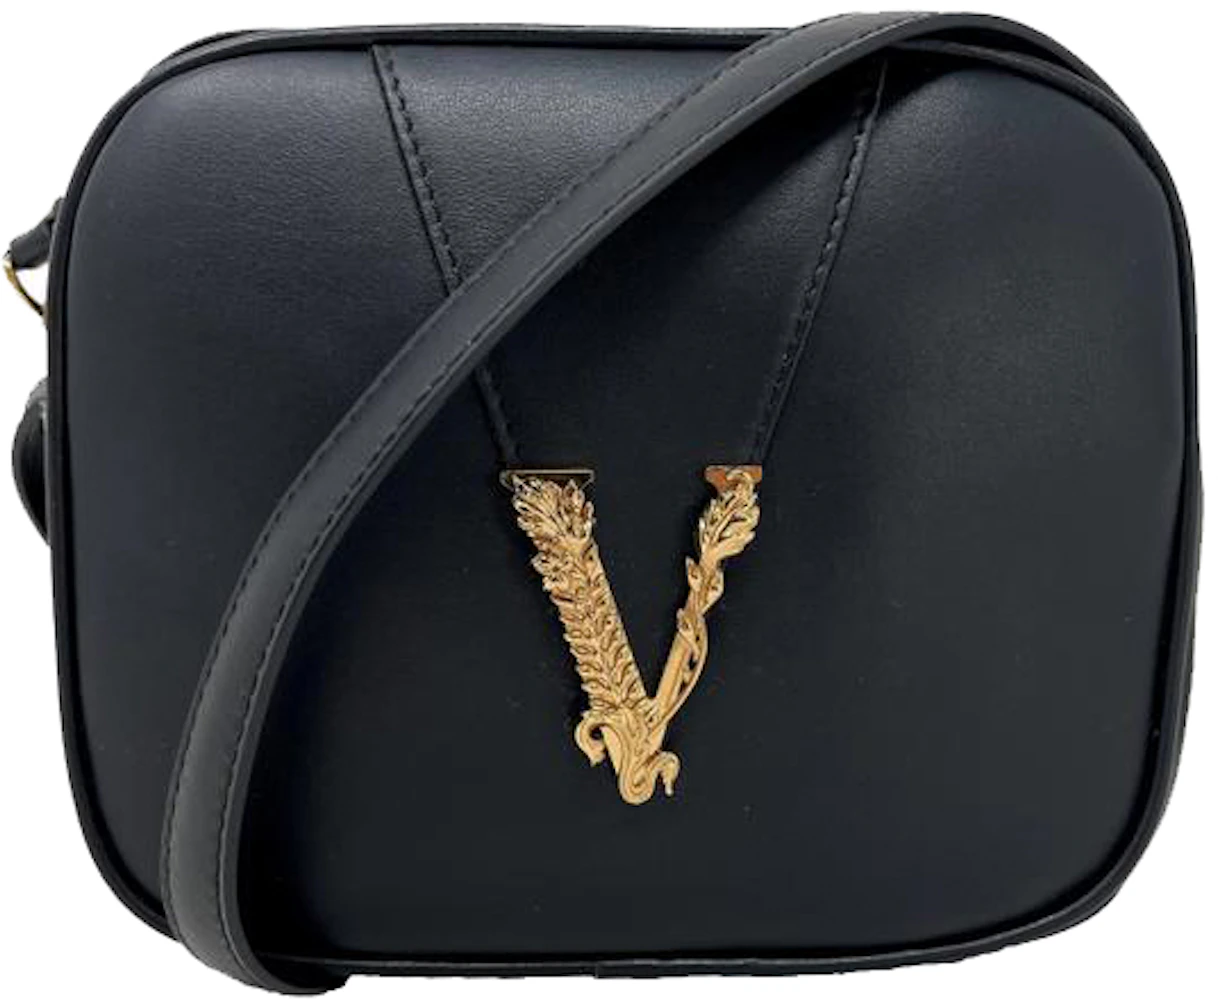 Cross body bags Versace - Virtus black leather crossbody bag